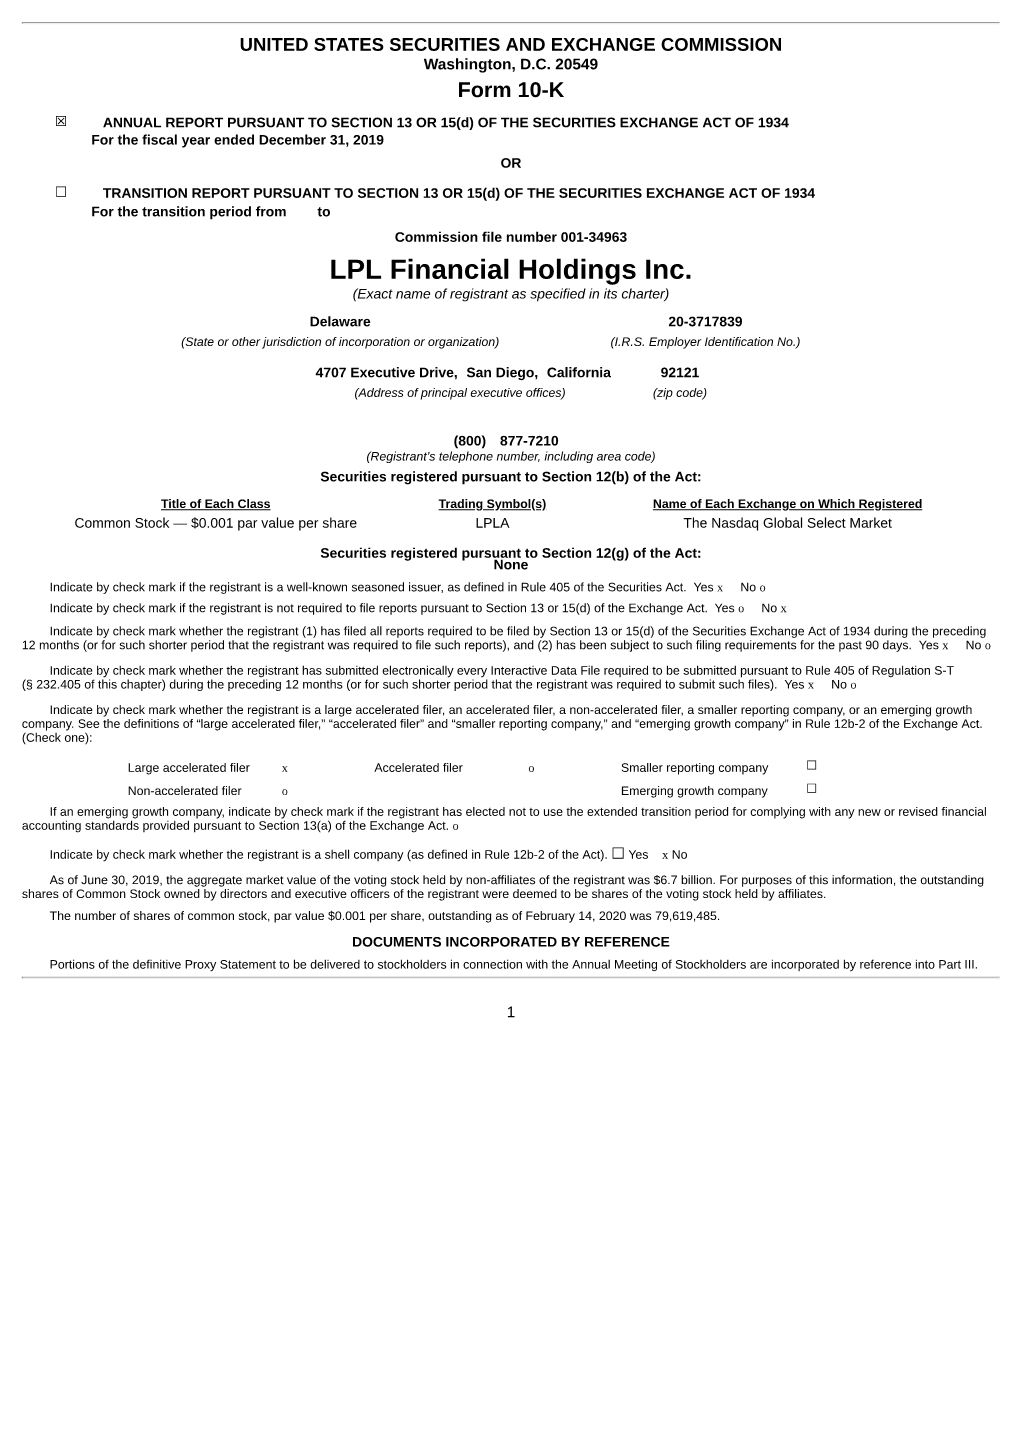 LPL Financial Holdings Inc